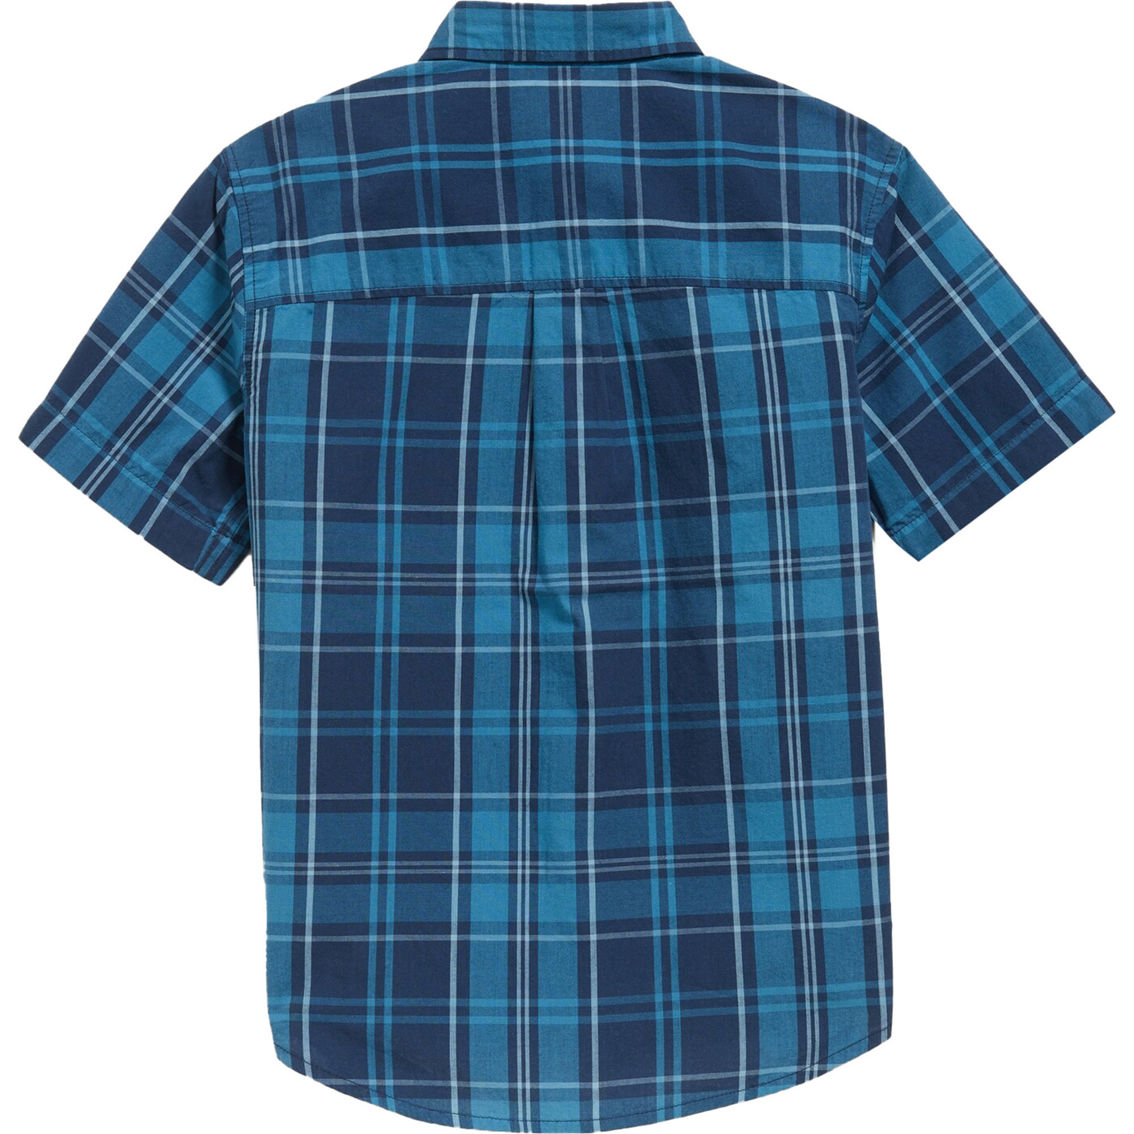 Old Navy Boys Poplin Plaid Shirt - Image 2 of 2